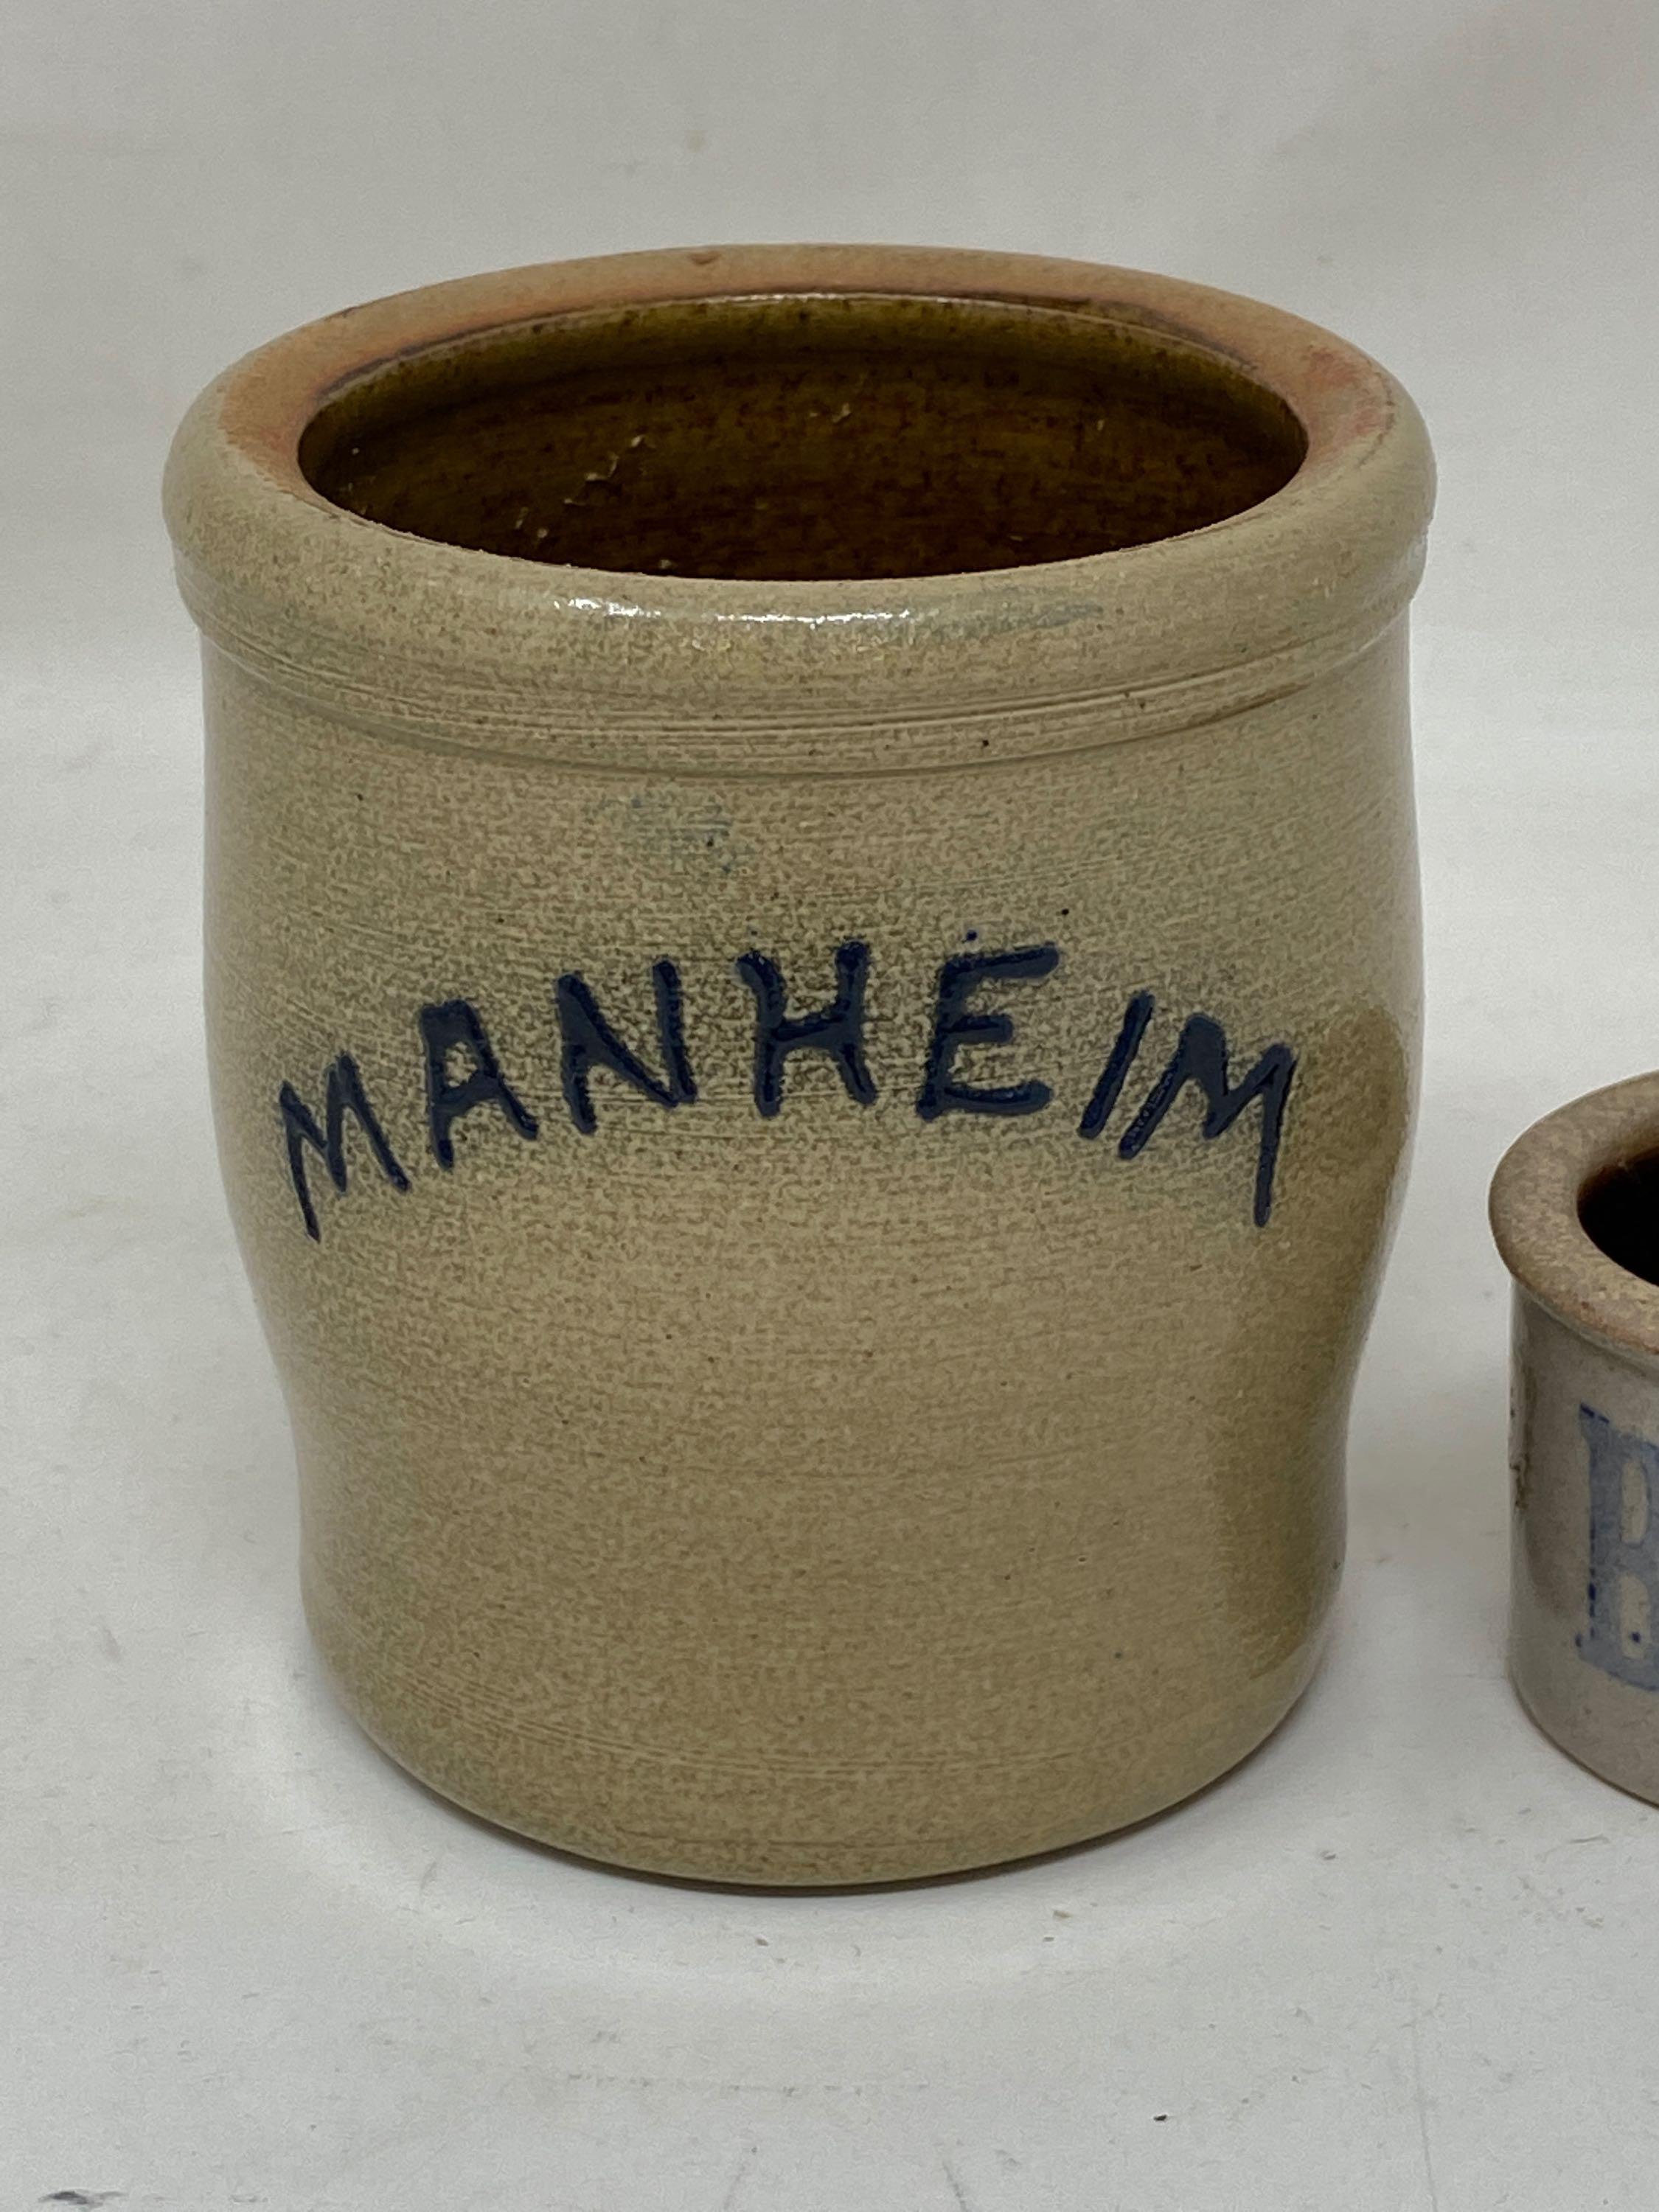 2 Stoneware Crocks- "Manheim" and "Butter"